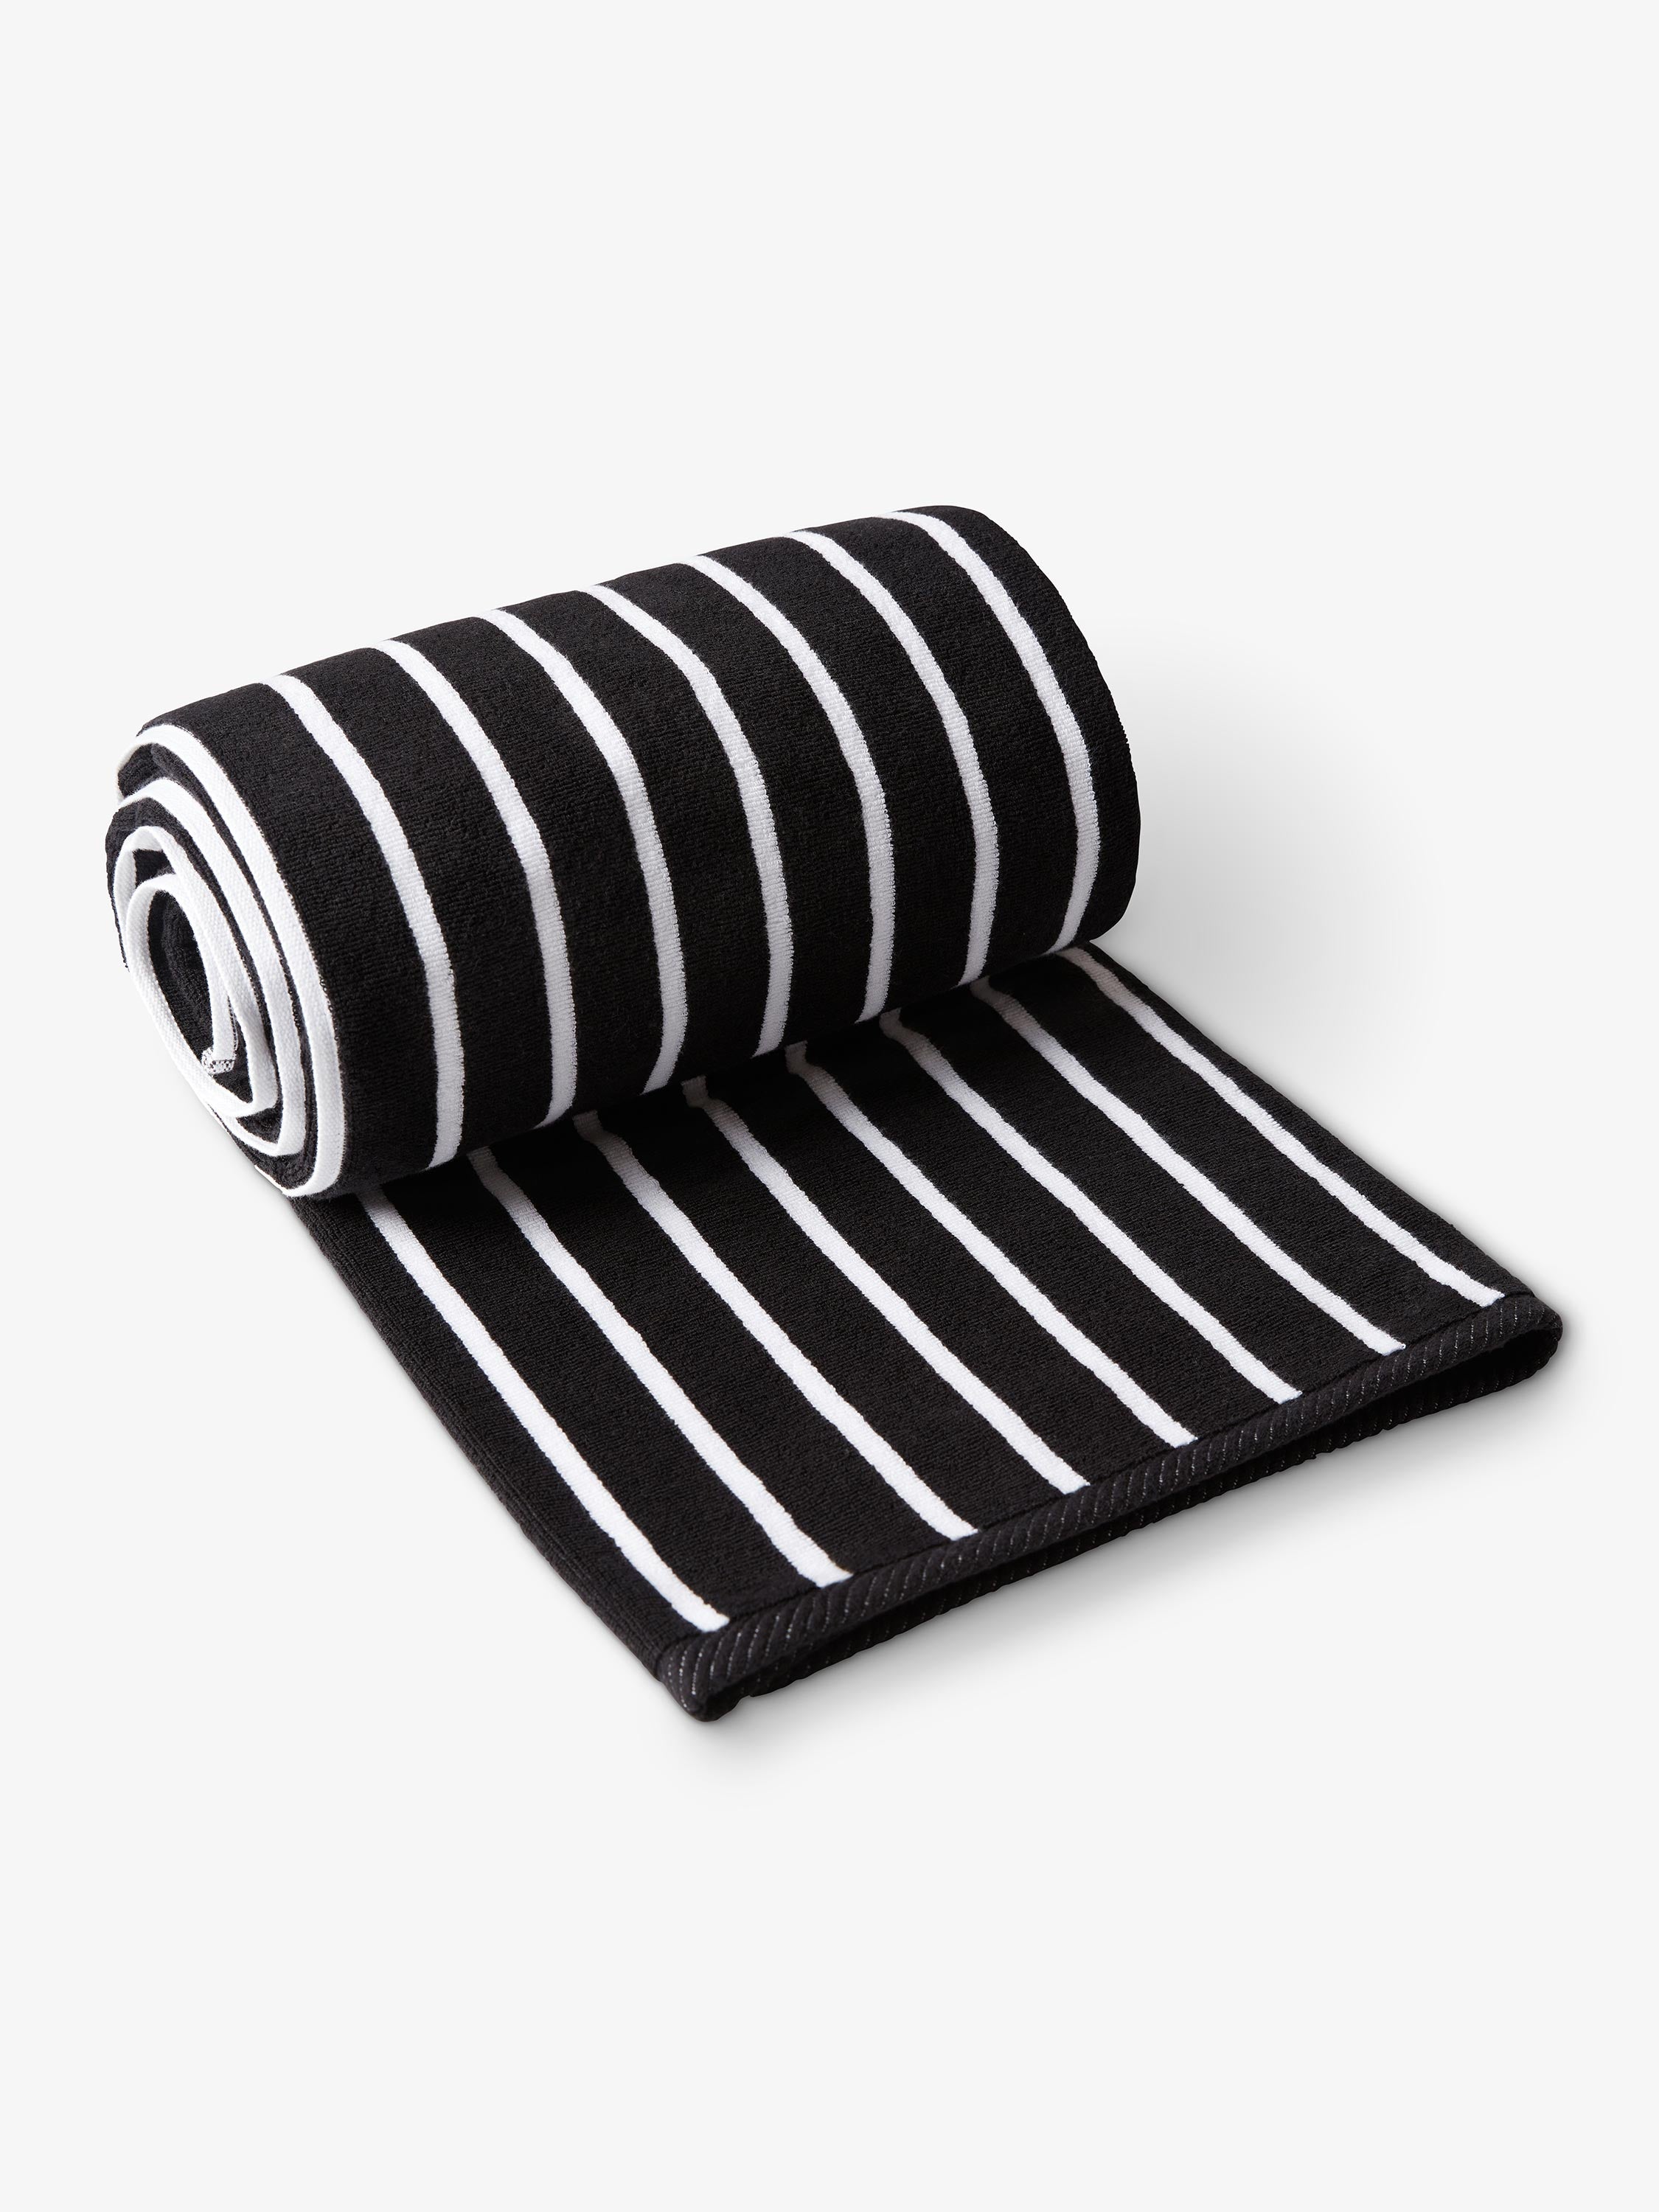 4-Piece Towel Set 2x Hand Towels 2x Bath Towels Premium Quick Dry